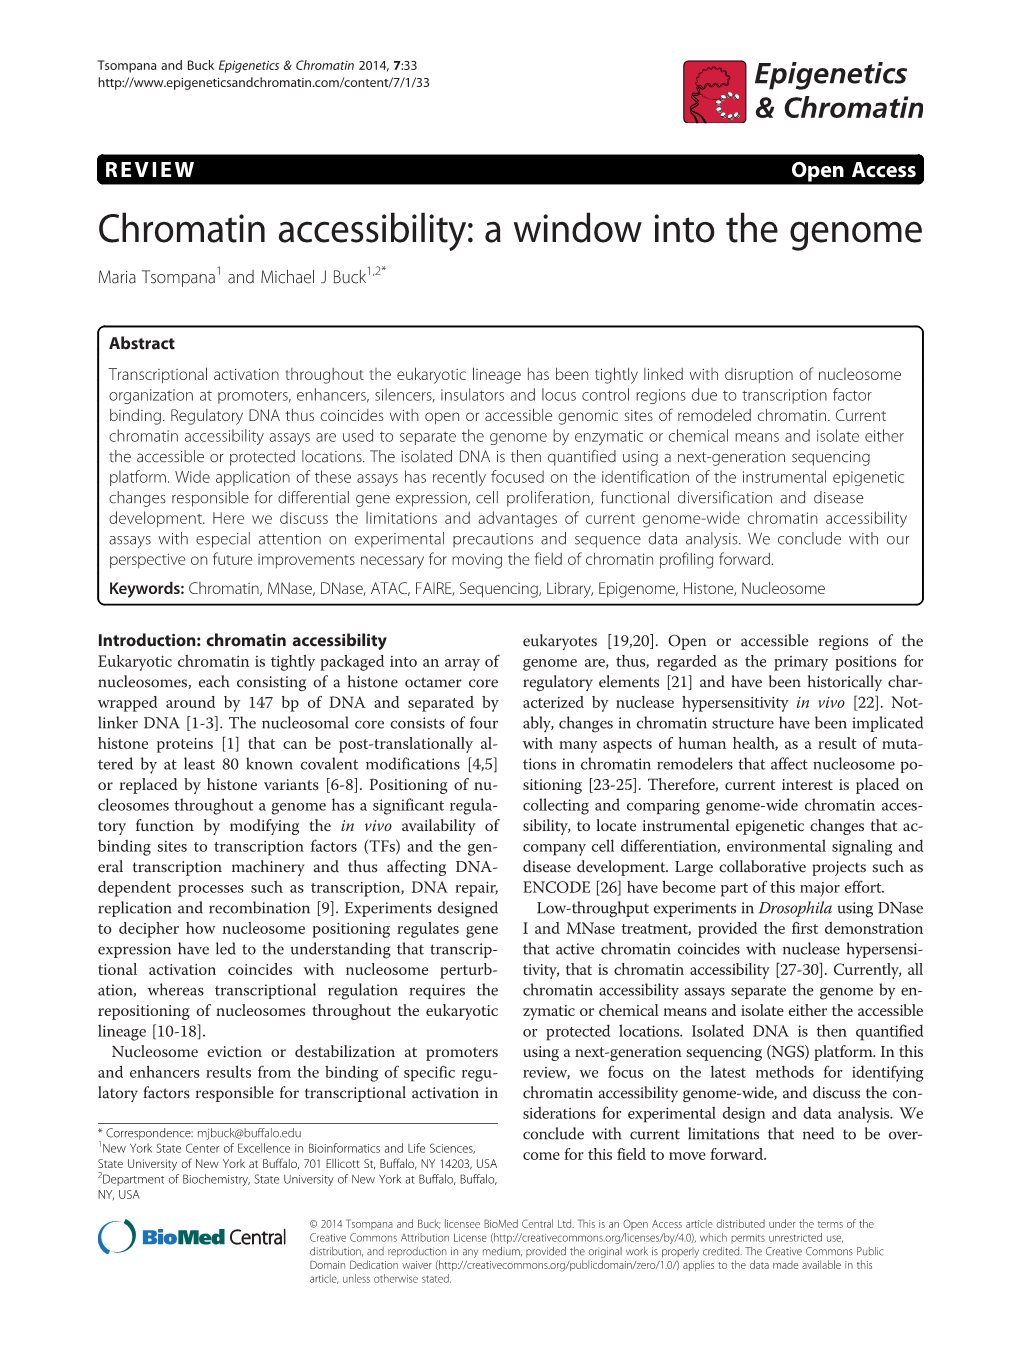 Chromatin Accessibility: a Window Into the Genome Maria Tsompana1 and Michael J Buck1,2*